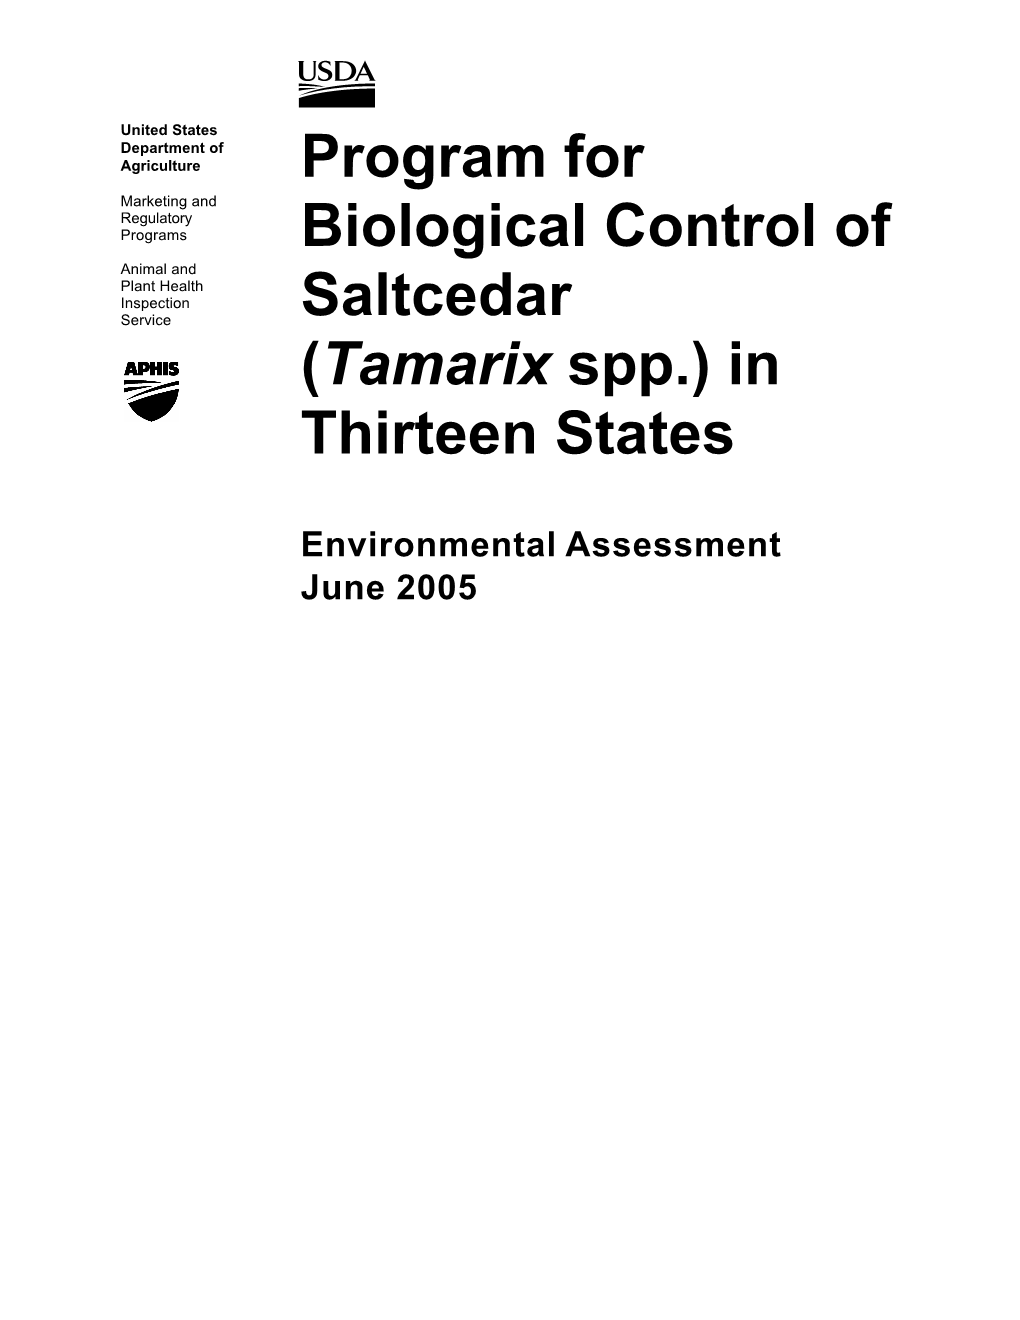 Program for Biological Control of Saltcedar (Tamarix Spp.) in Thirteen States